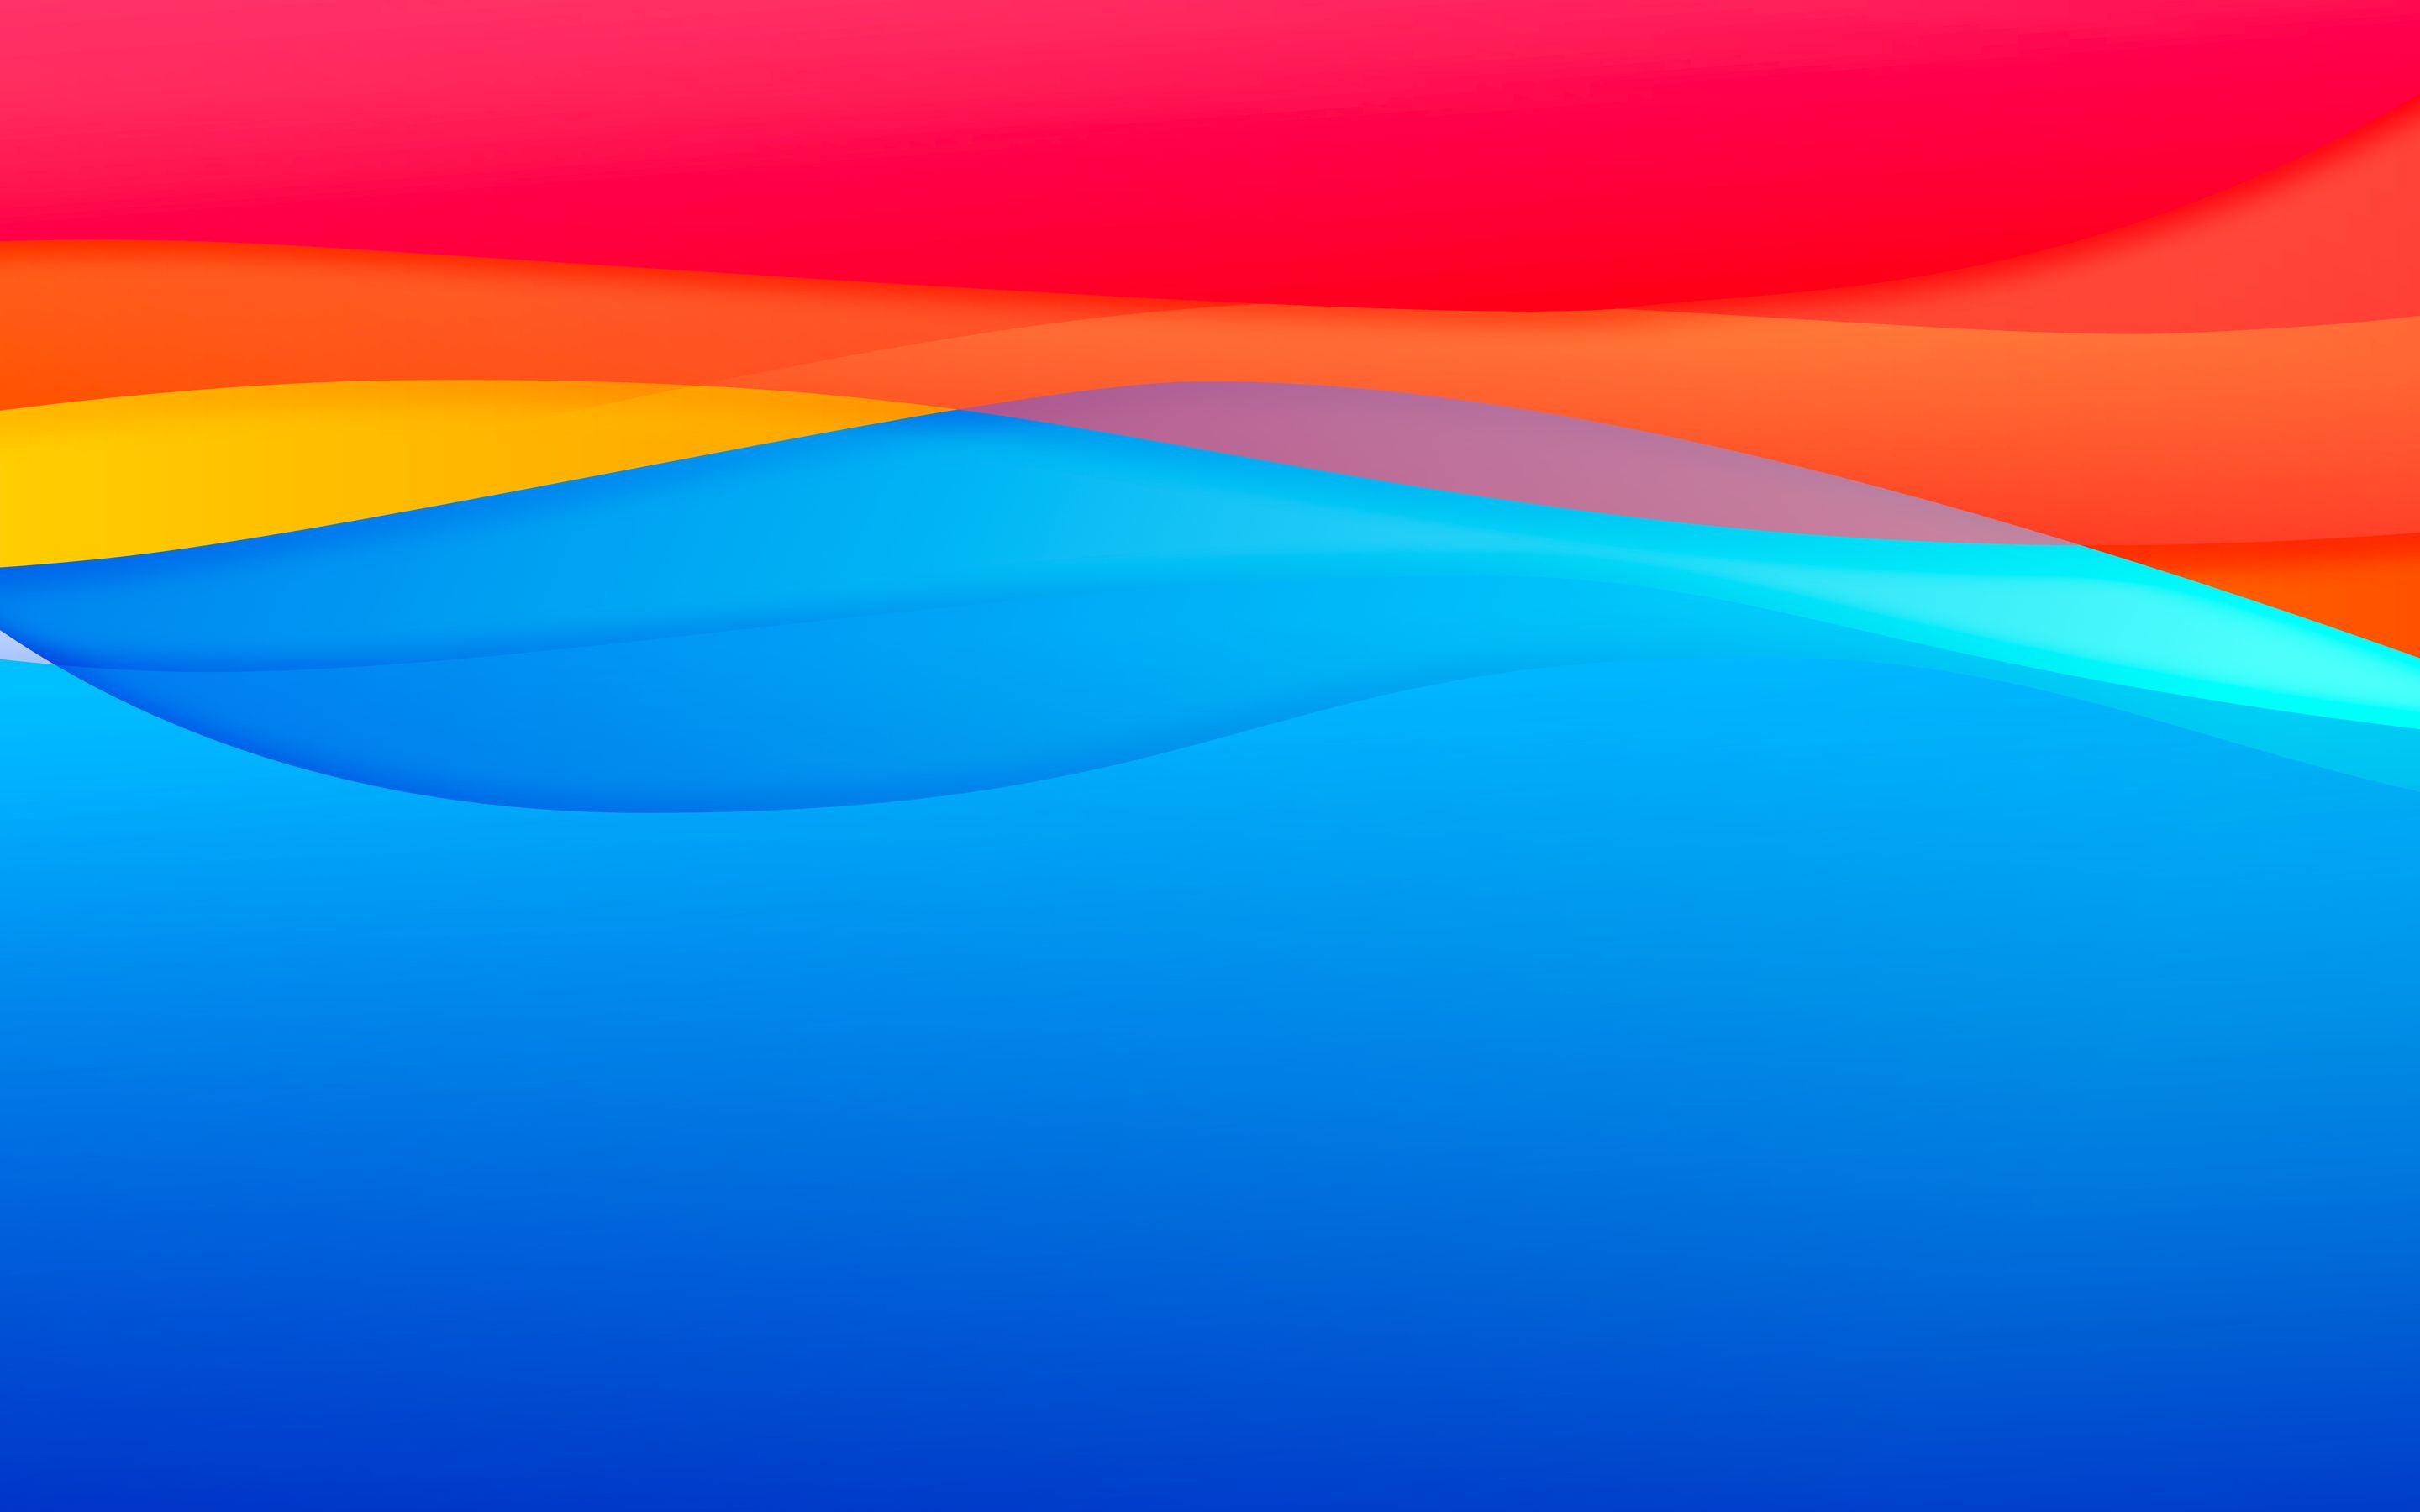 Big Sur X Minimal 8k Macbook Pro Retina HD 4k Wallpaper, Image, Background, Photo and Picture